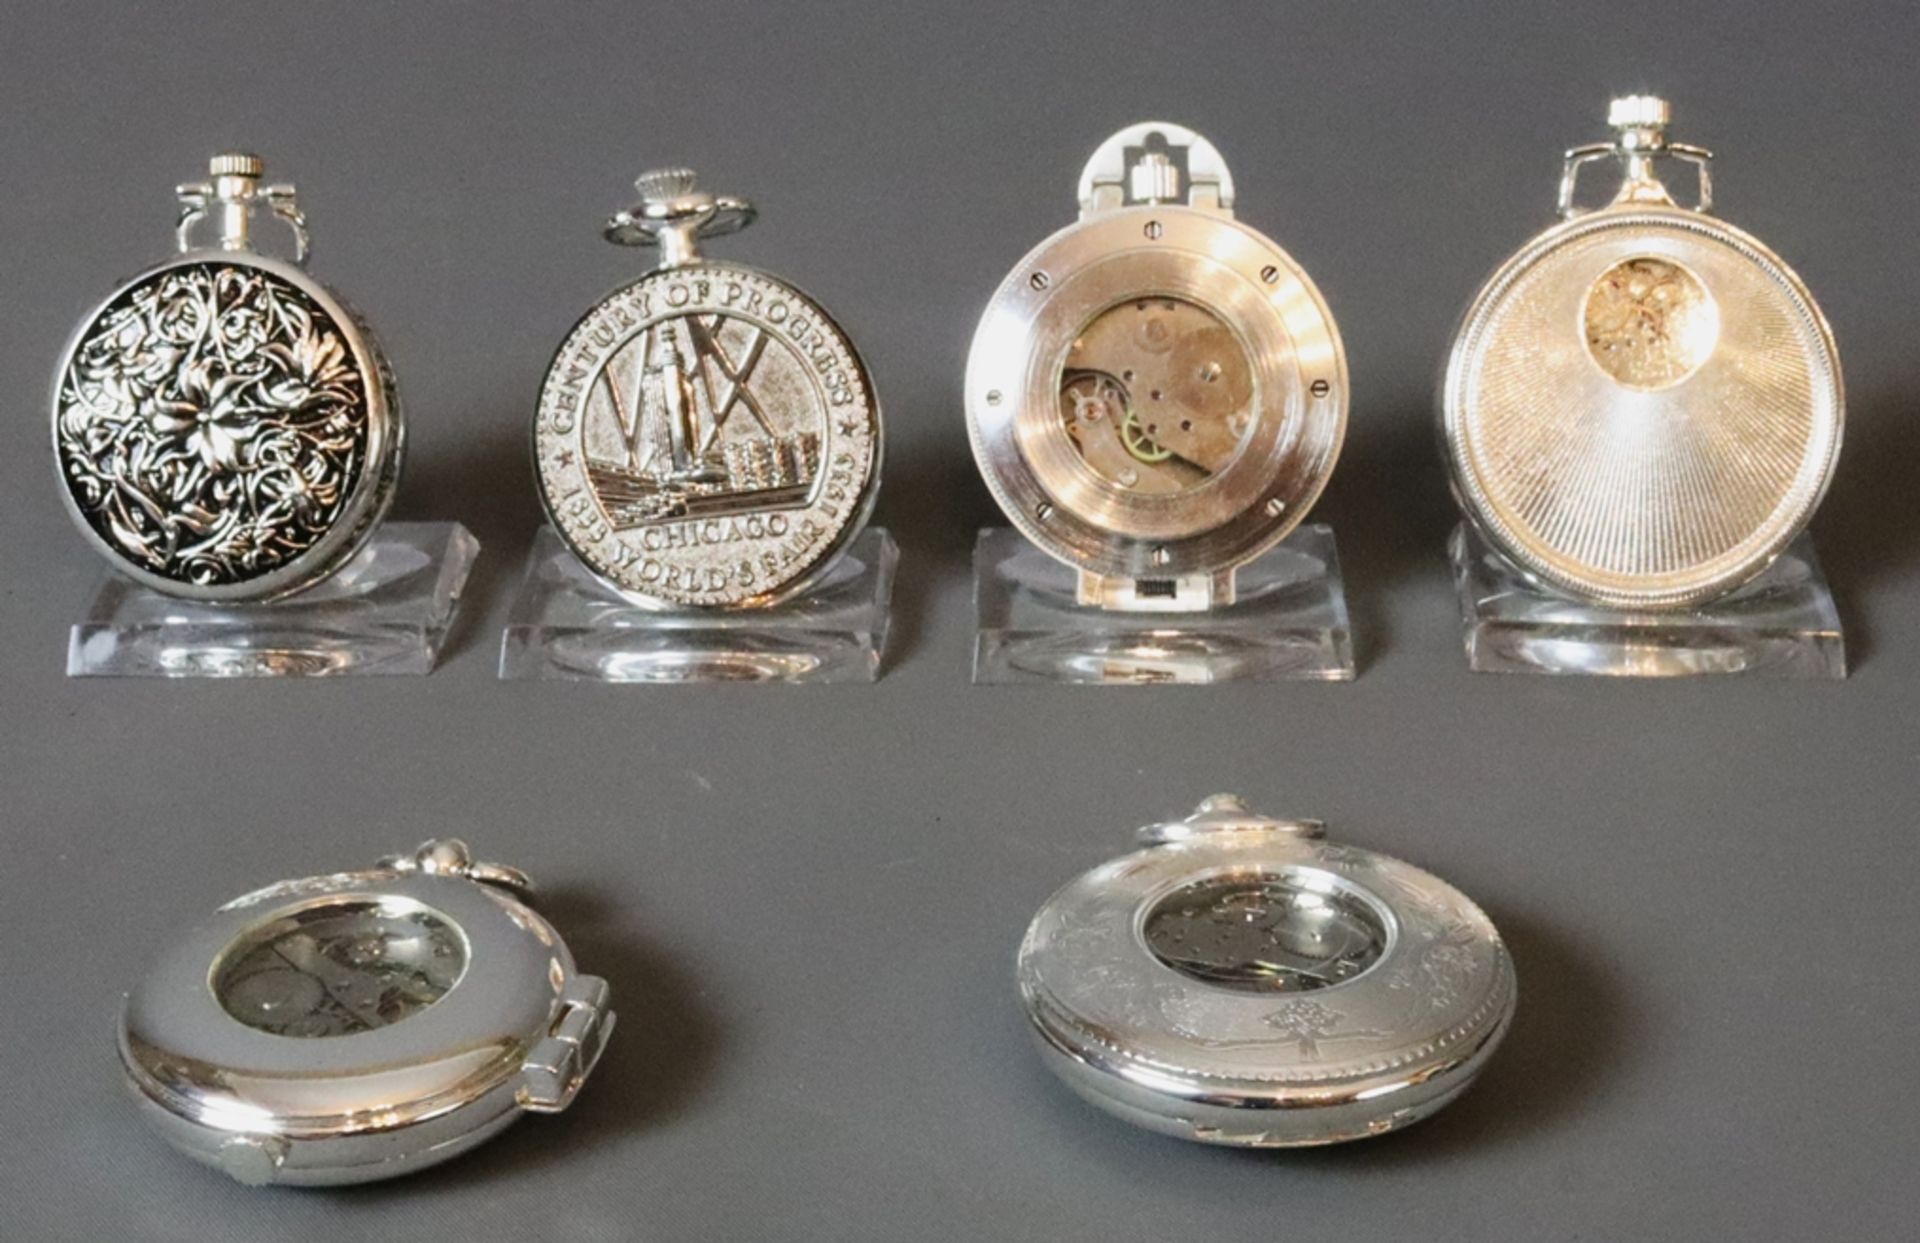 6 pocket watches, modern 21st century, German - Image 2 of 8